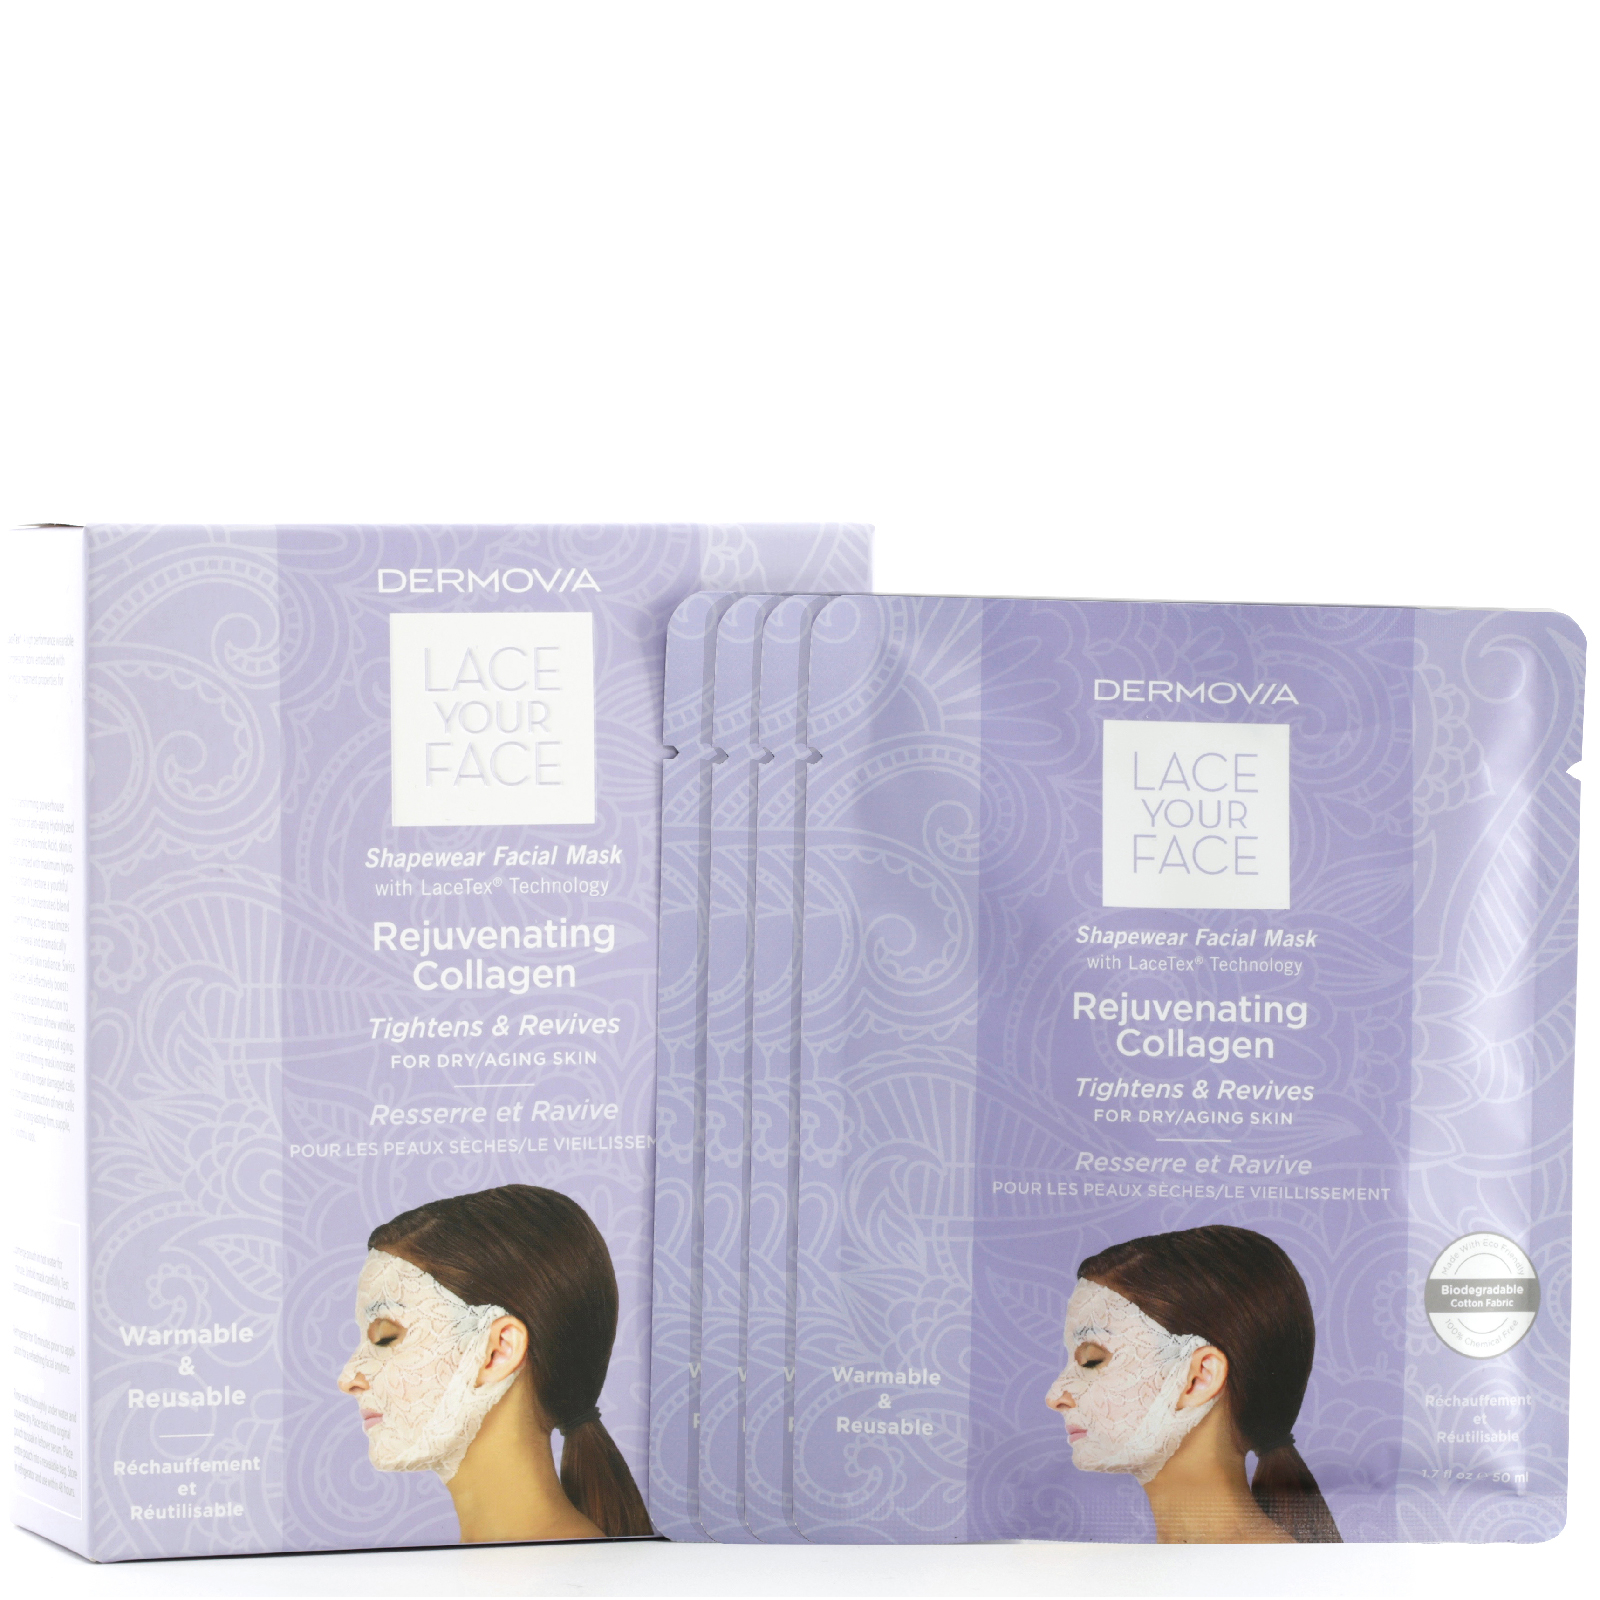 Dermovia LACE YOUR FACE Compression Facial Treatment Mask - Rejuvenating Collagen (4 Pack)